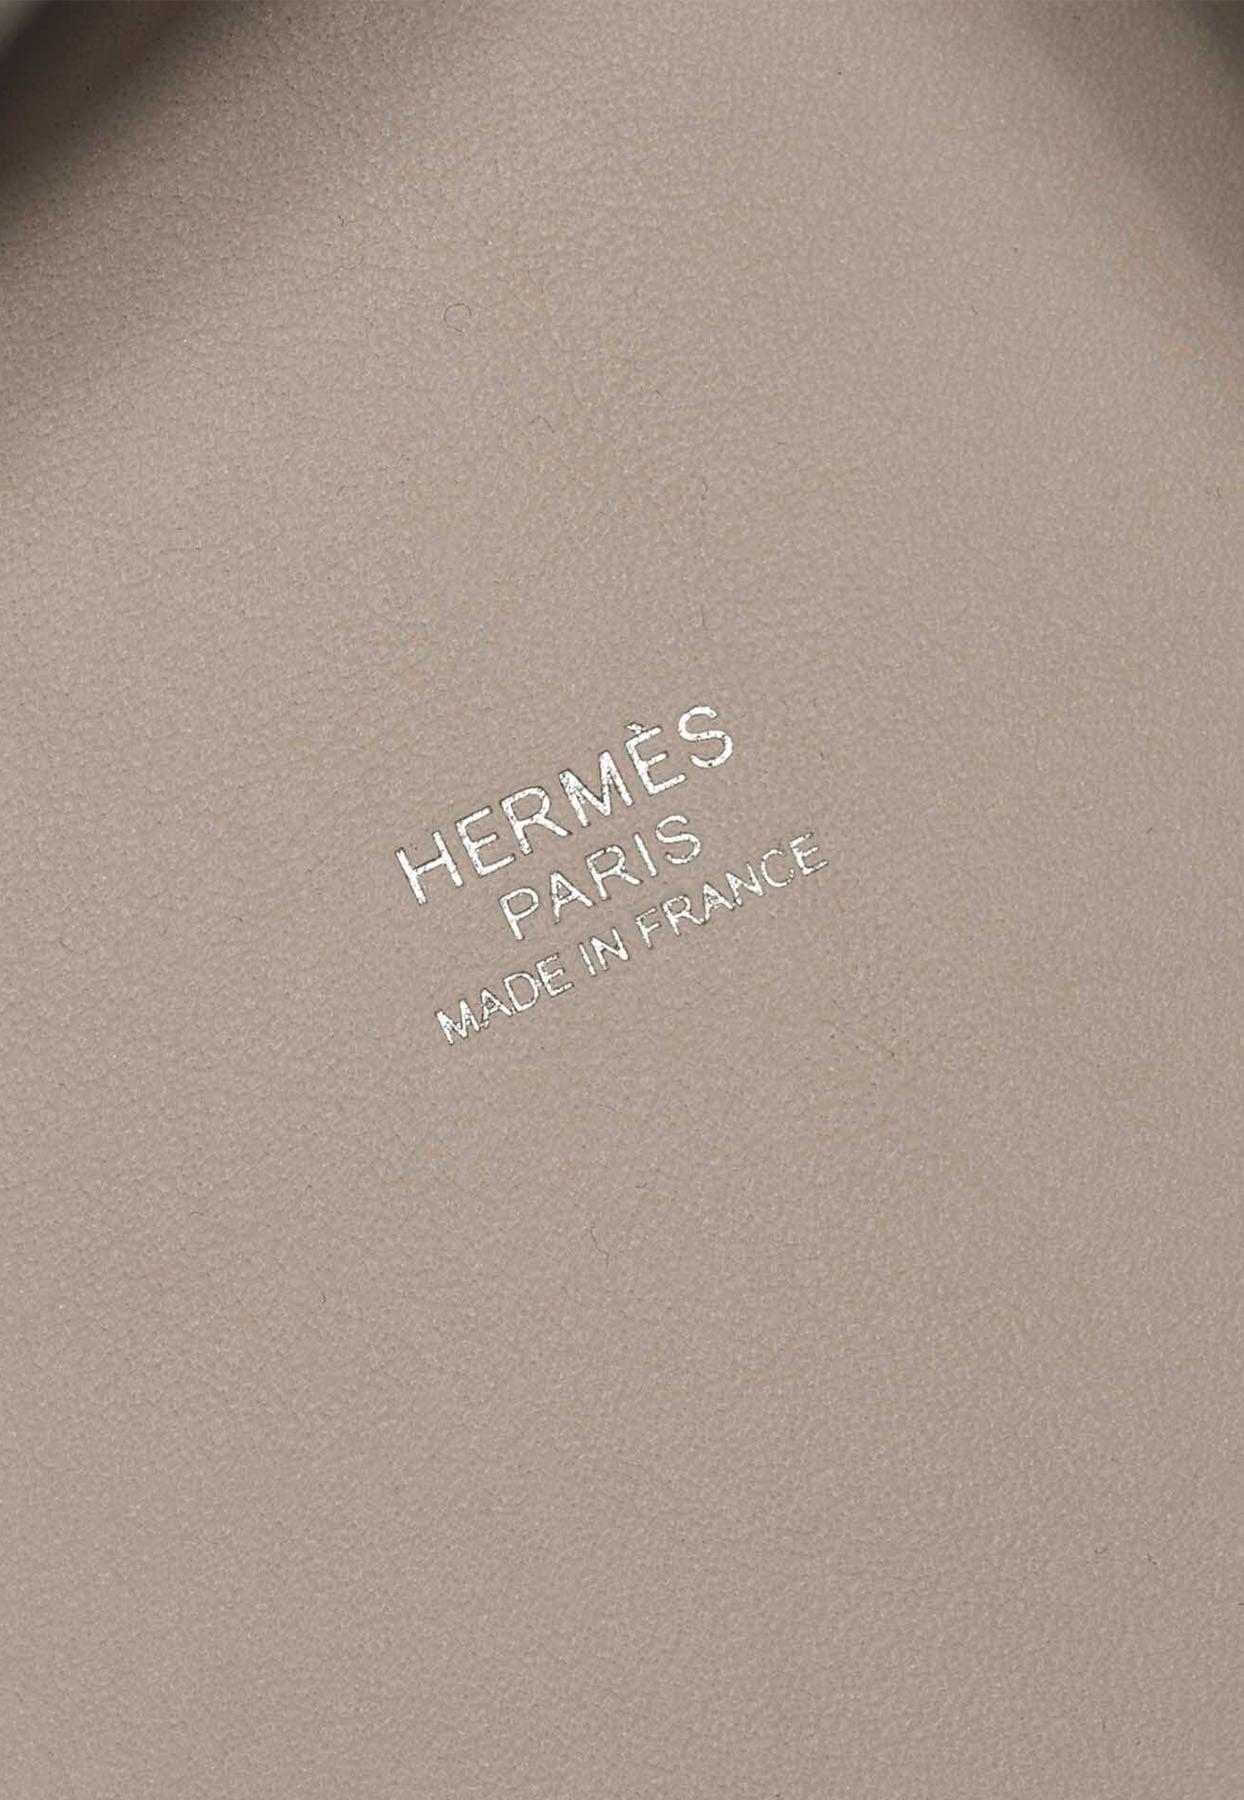 Hermès Micro Lucky Daisy Picotin 14 Swift Nata / Vert / White